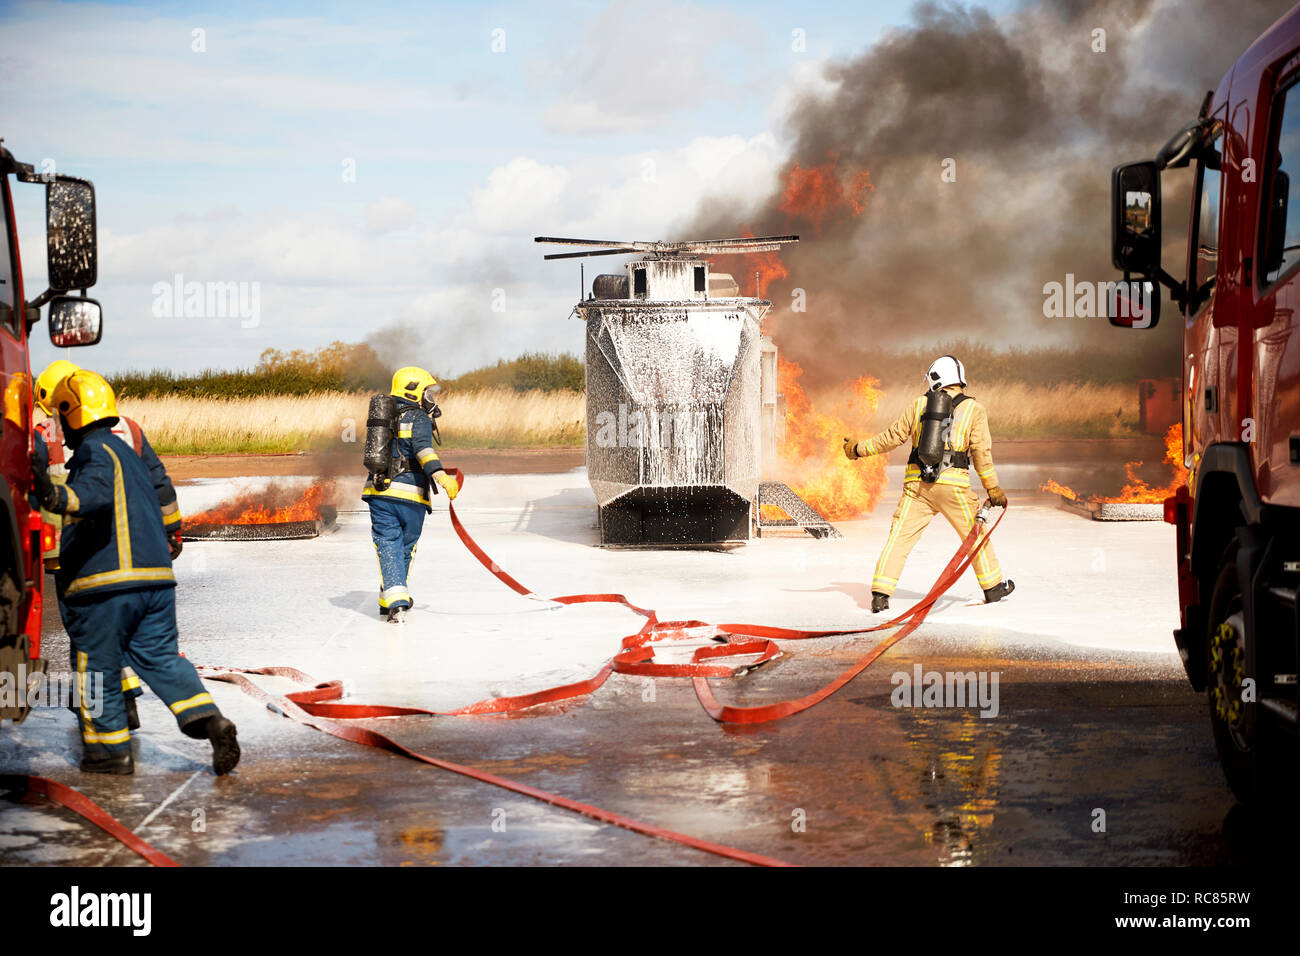 Firemen training, team of firemen extinguishing mock helicopter fire at training facility Stock Photo